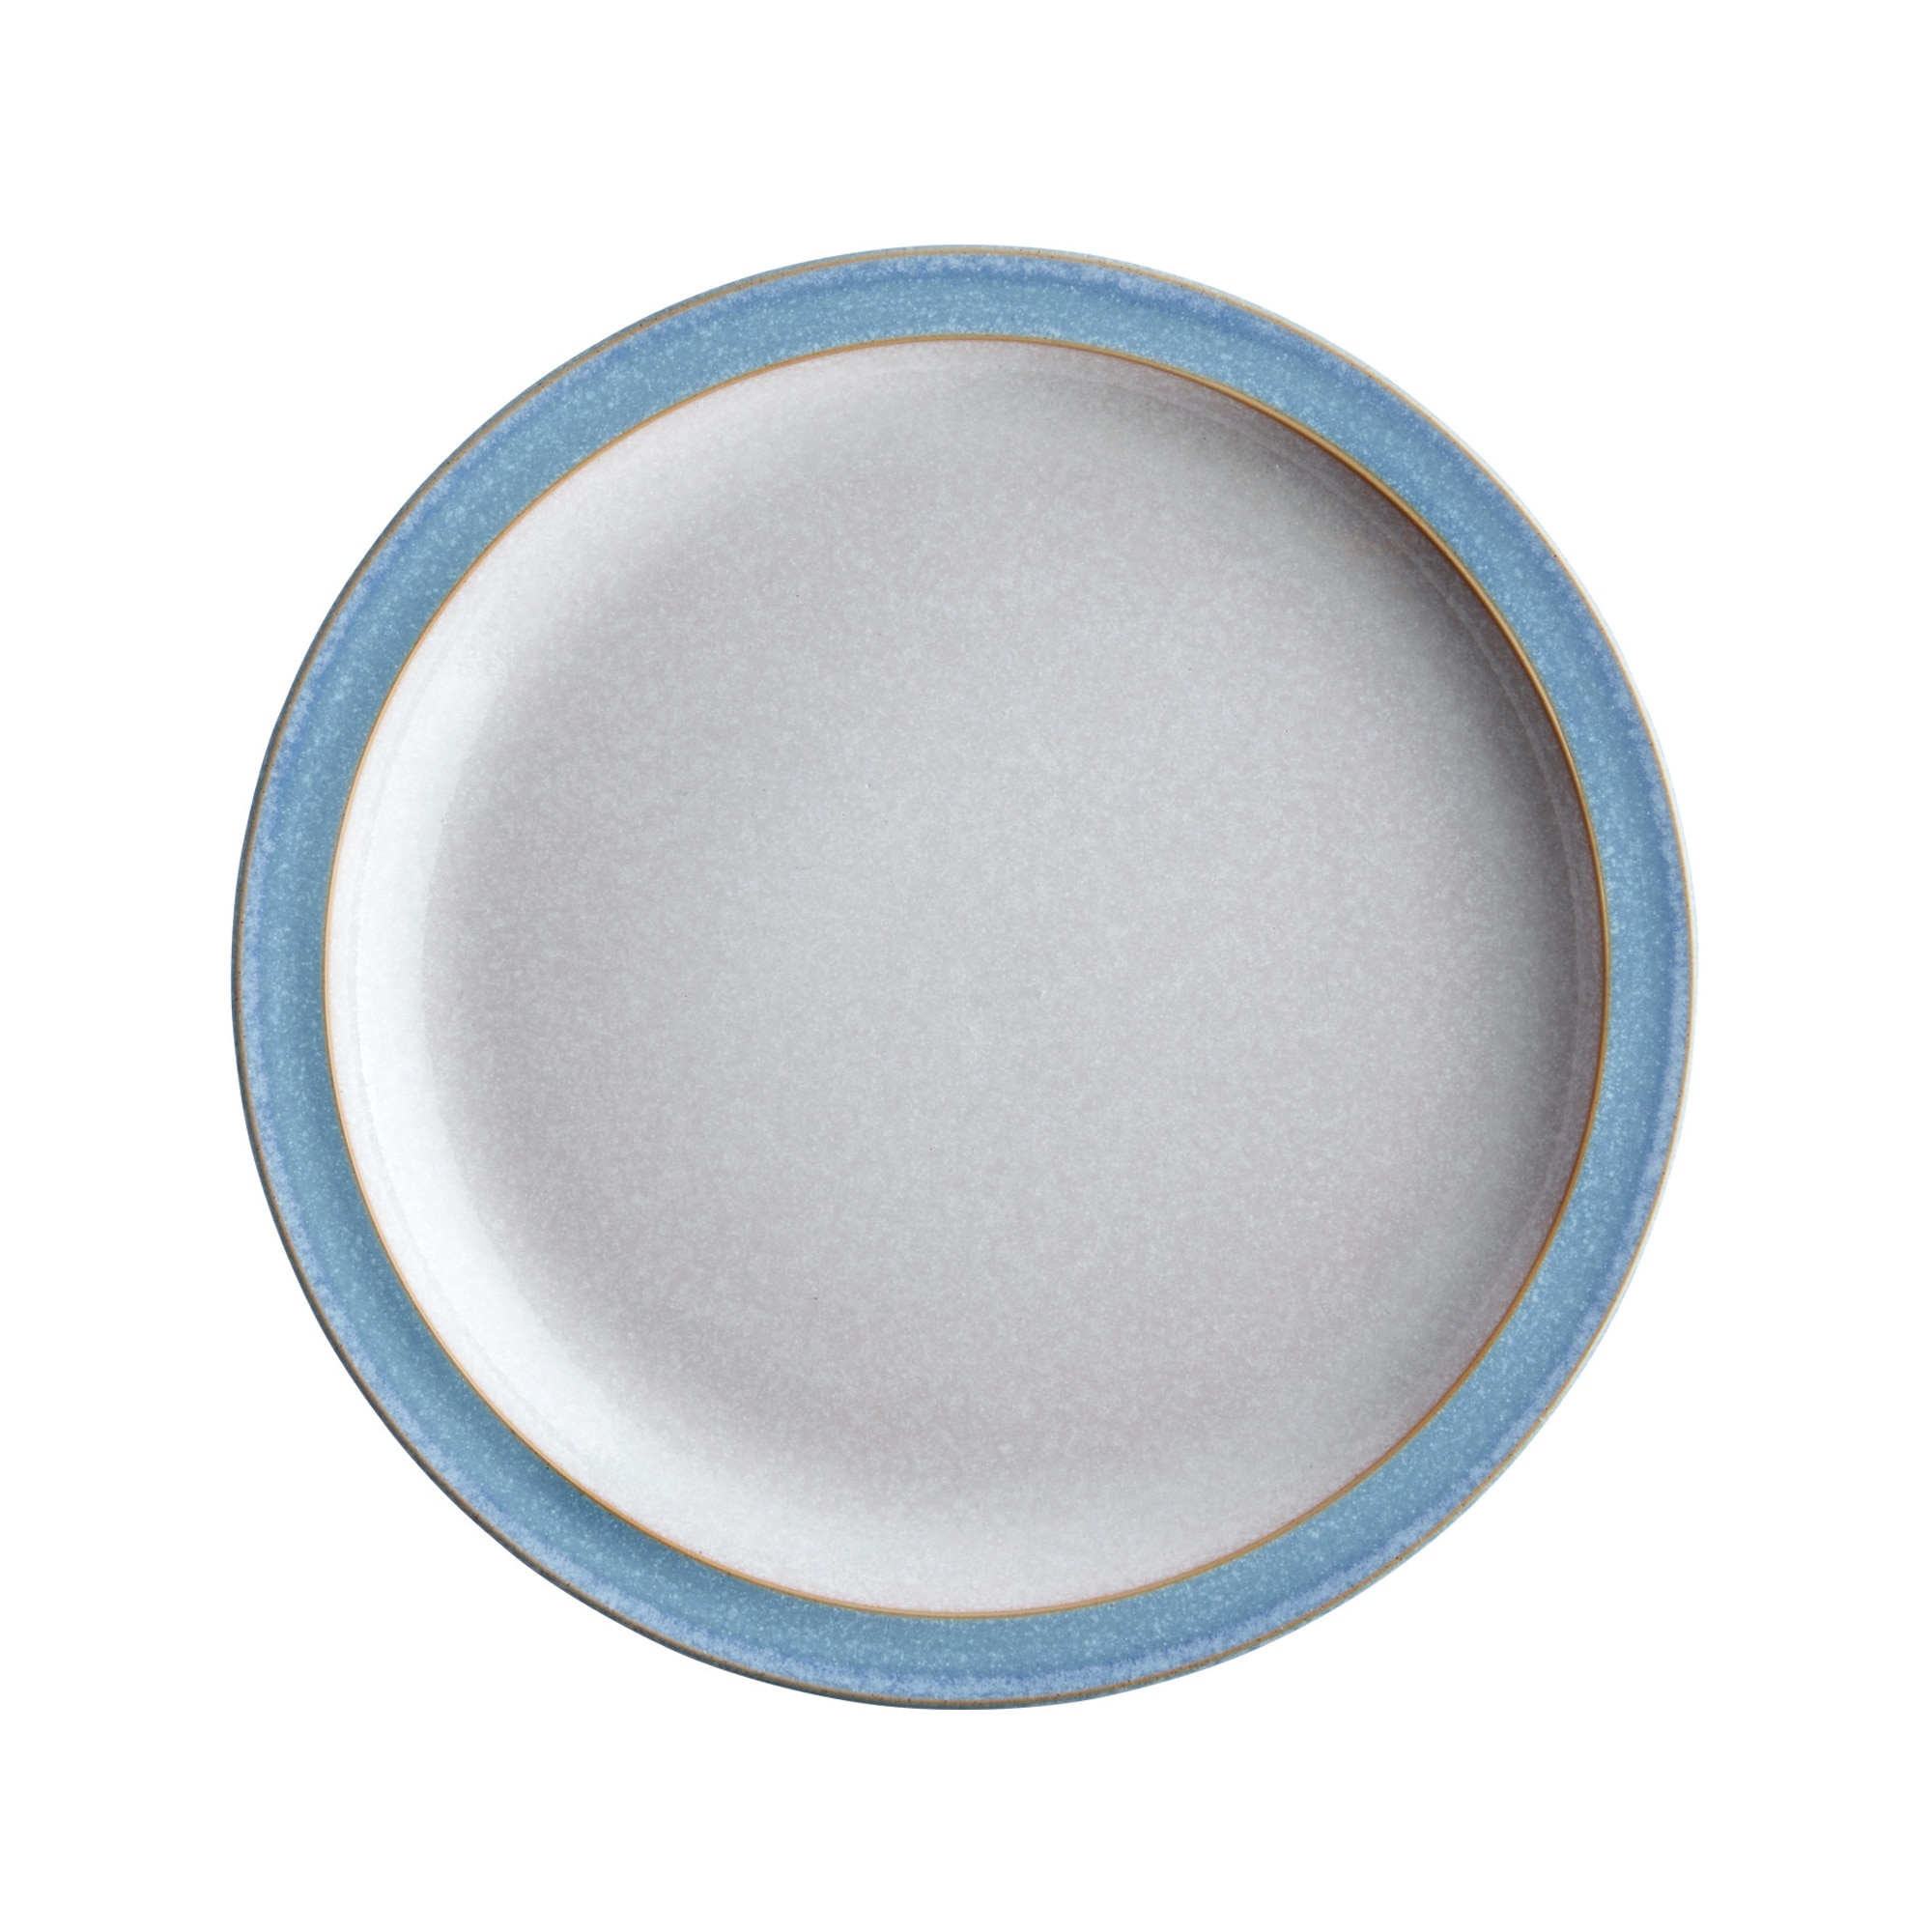 Elements Blue Dinner Plate